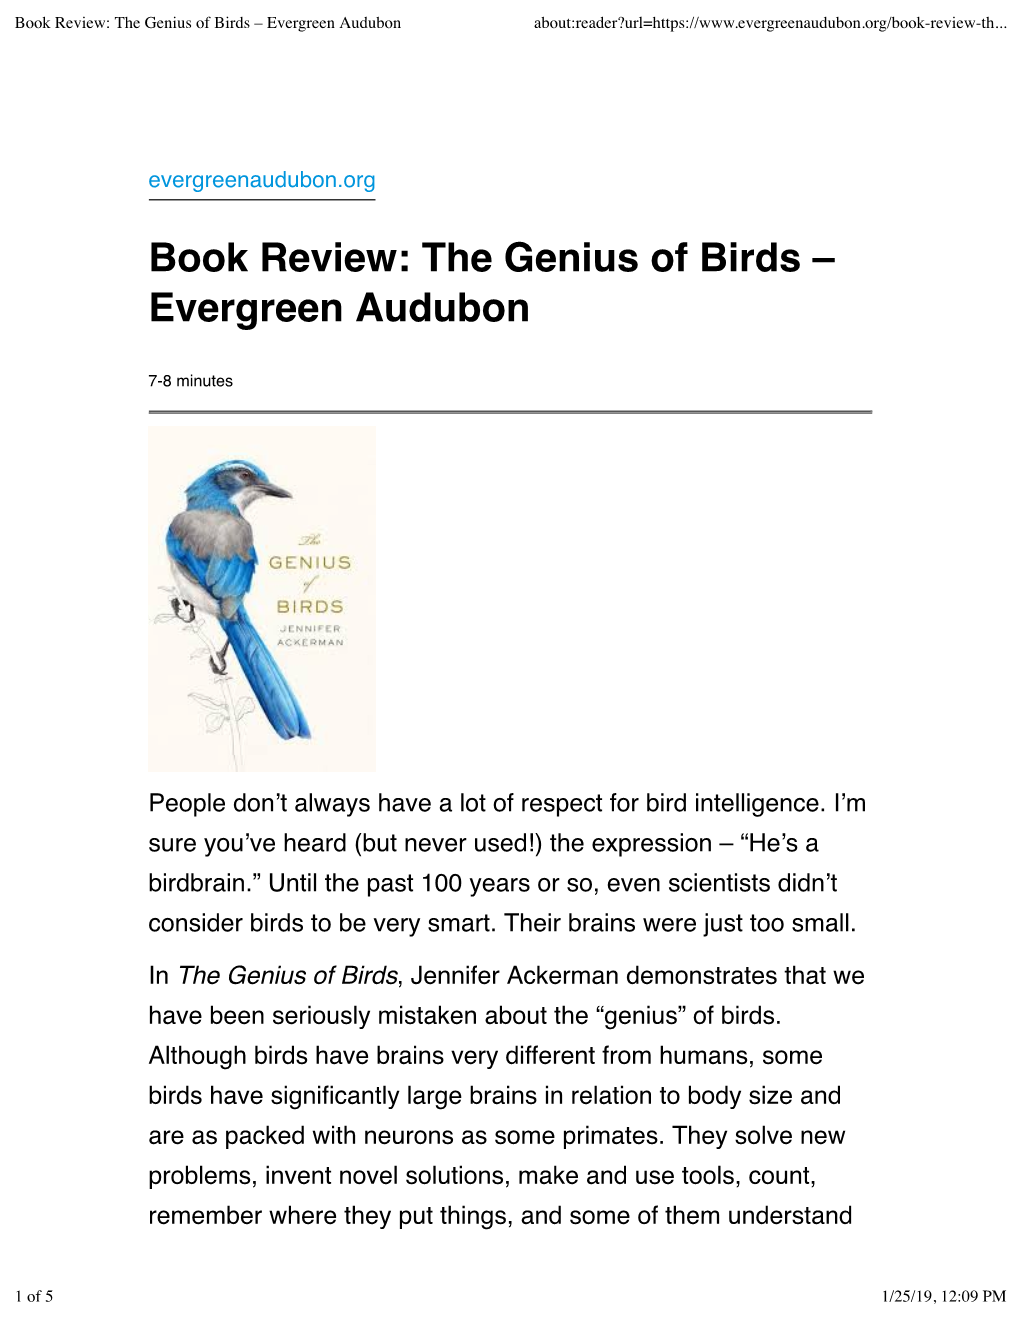 Book Review: the Genius of Birds – Evergreen Audubon About:Reader?Url=